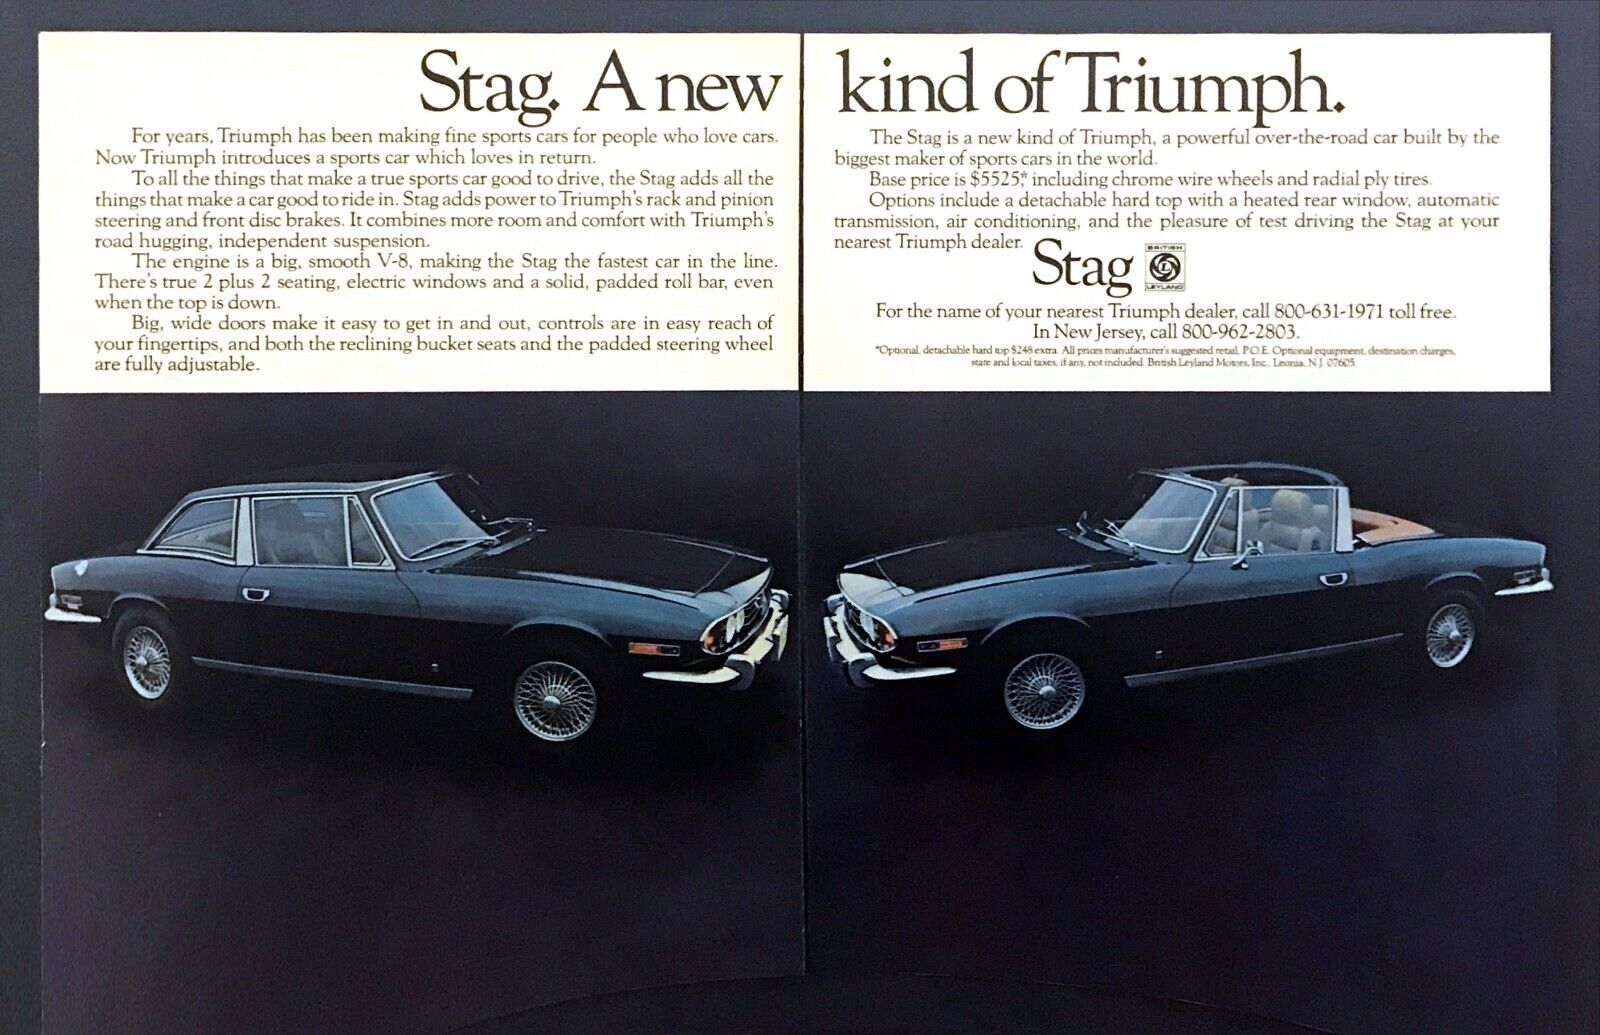 1971 Triumph Stag 2+2 Hardtop & Convertible Photo 2-page Vintage Print Ad